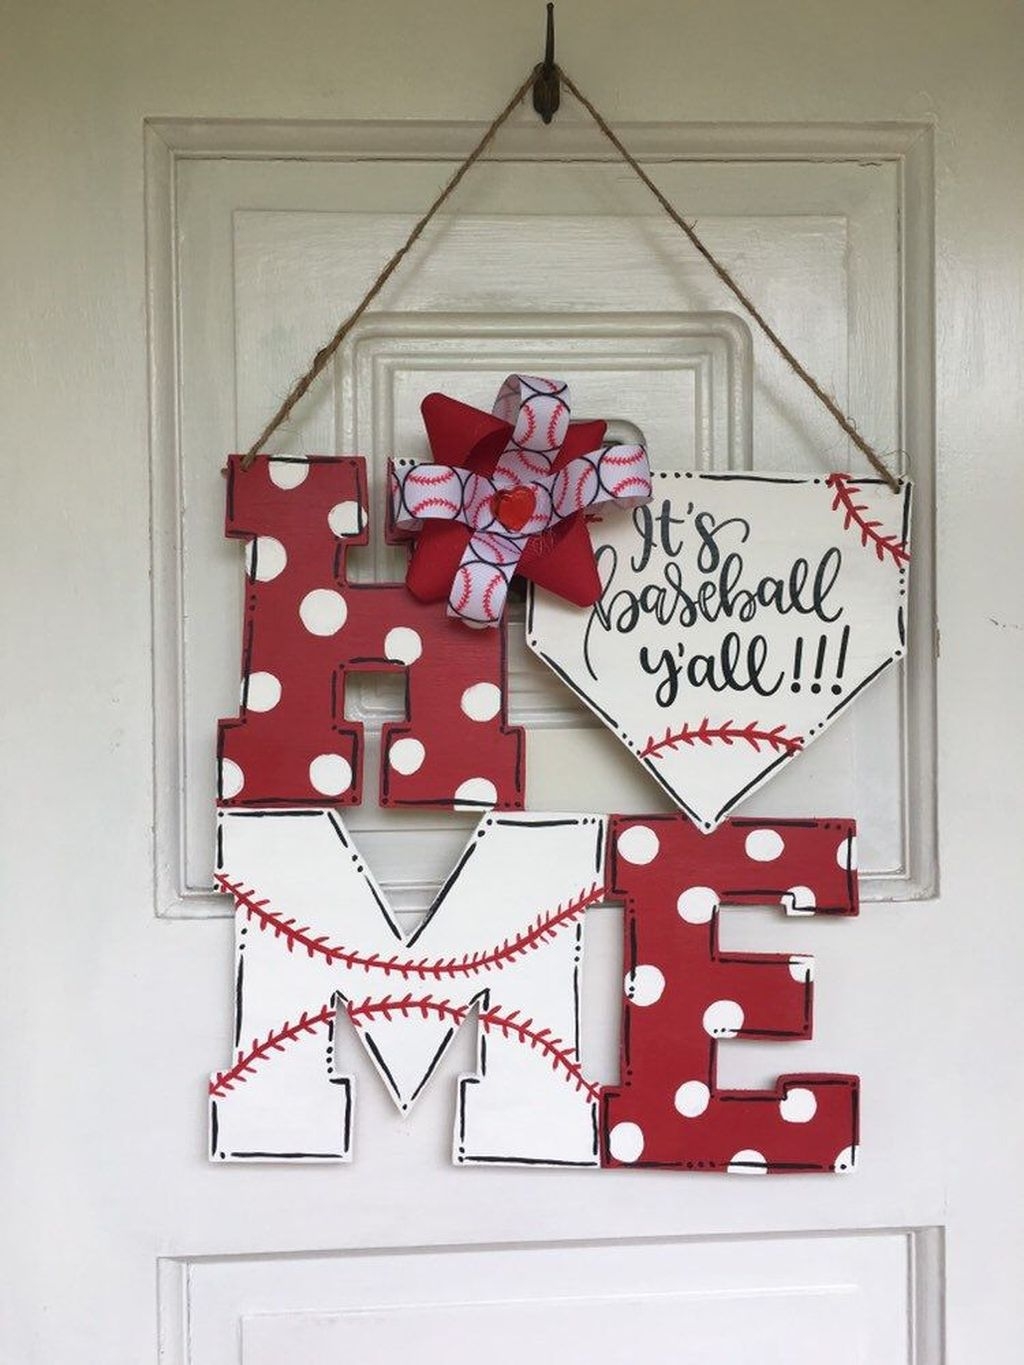 Cute Valentine Door Decorations Ideas To Spread The Seasons Greetings 19